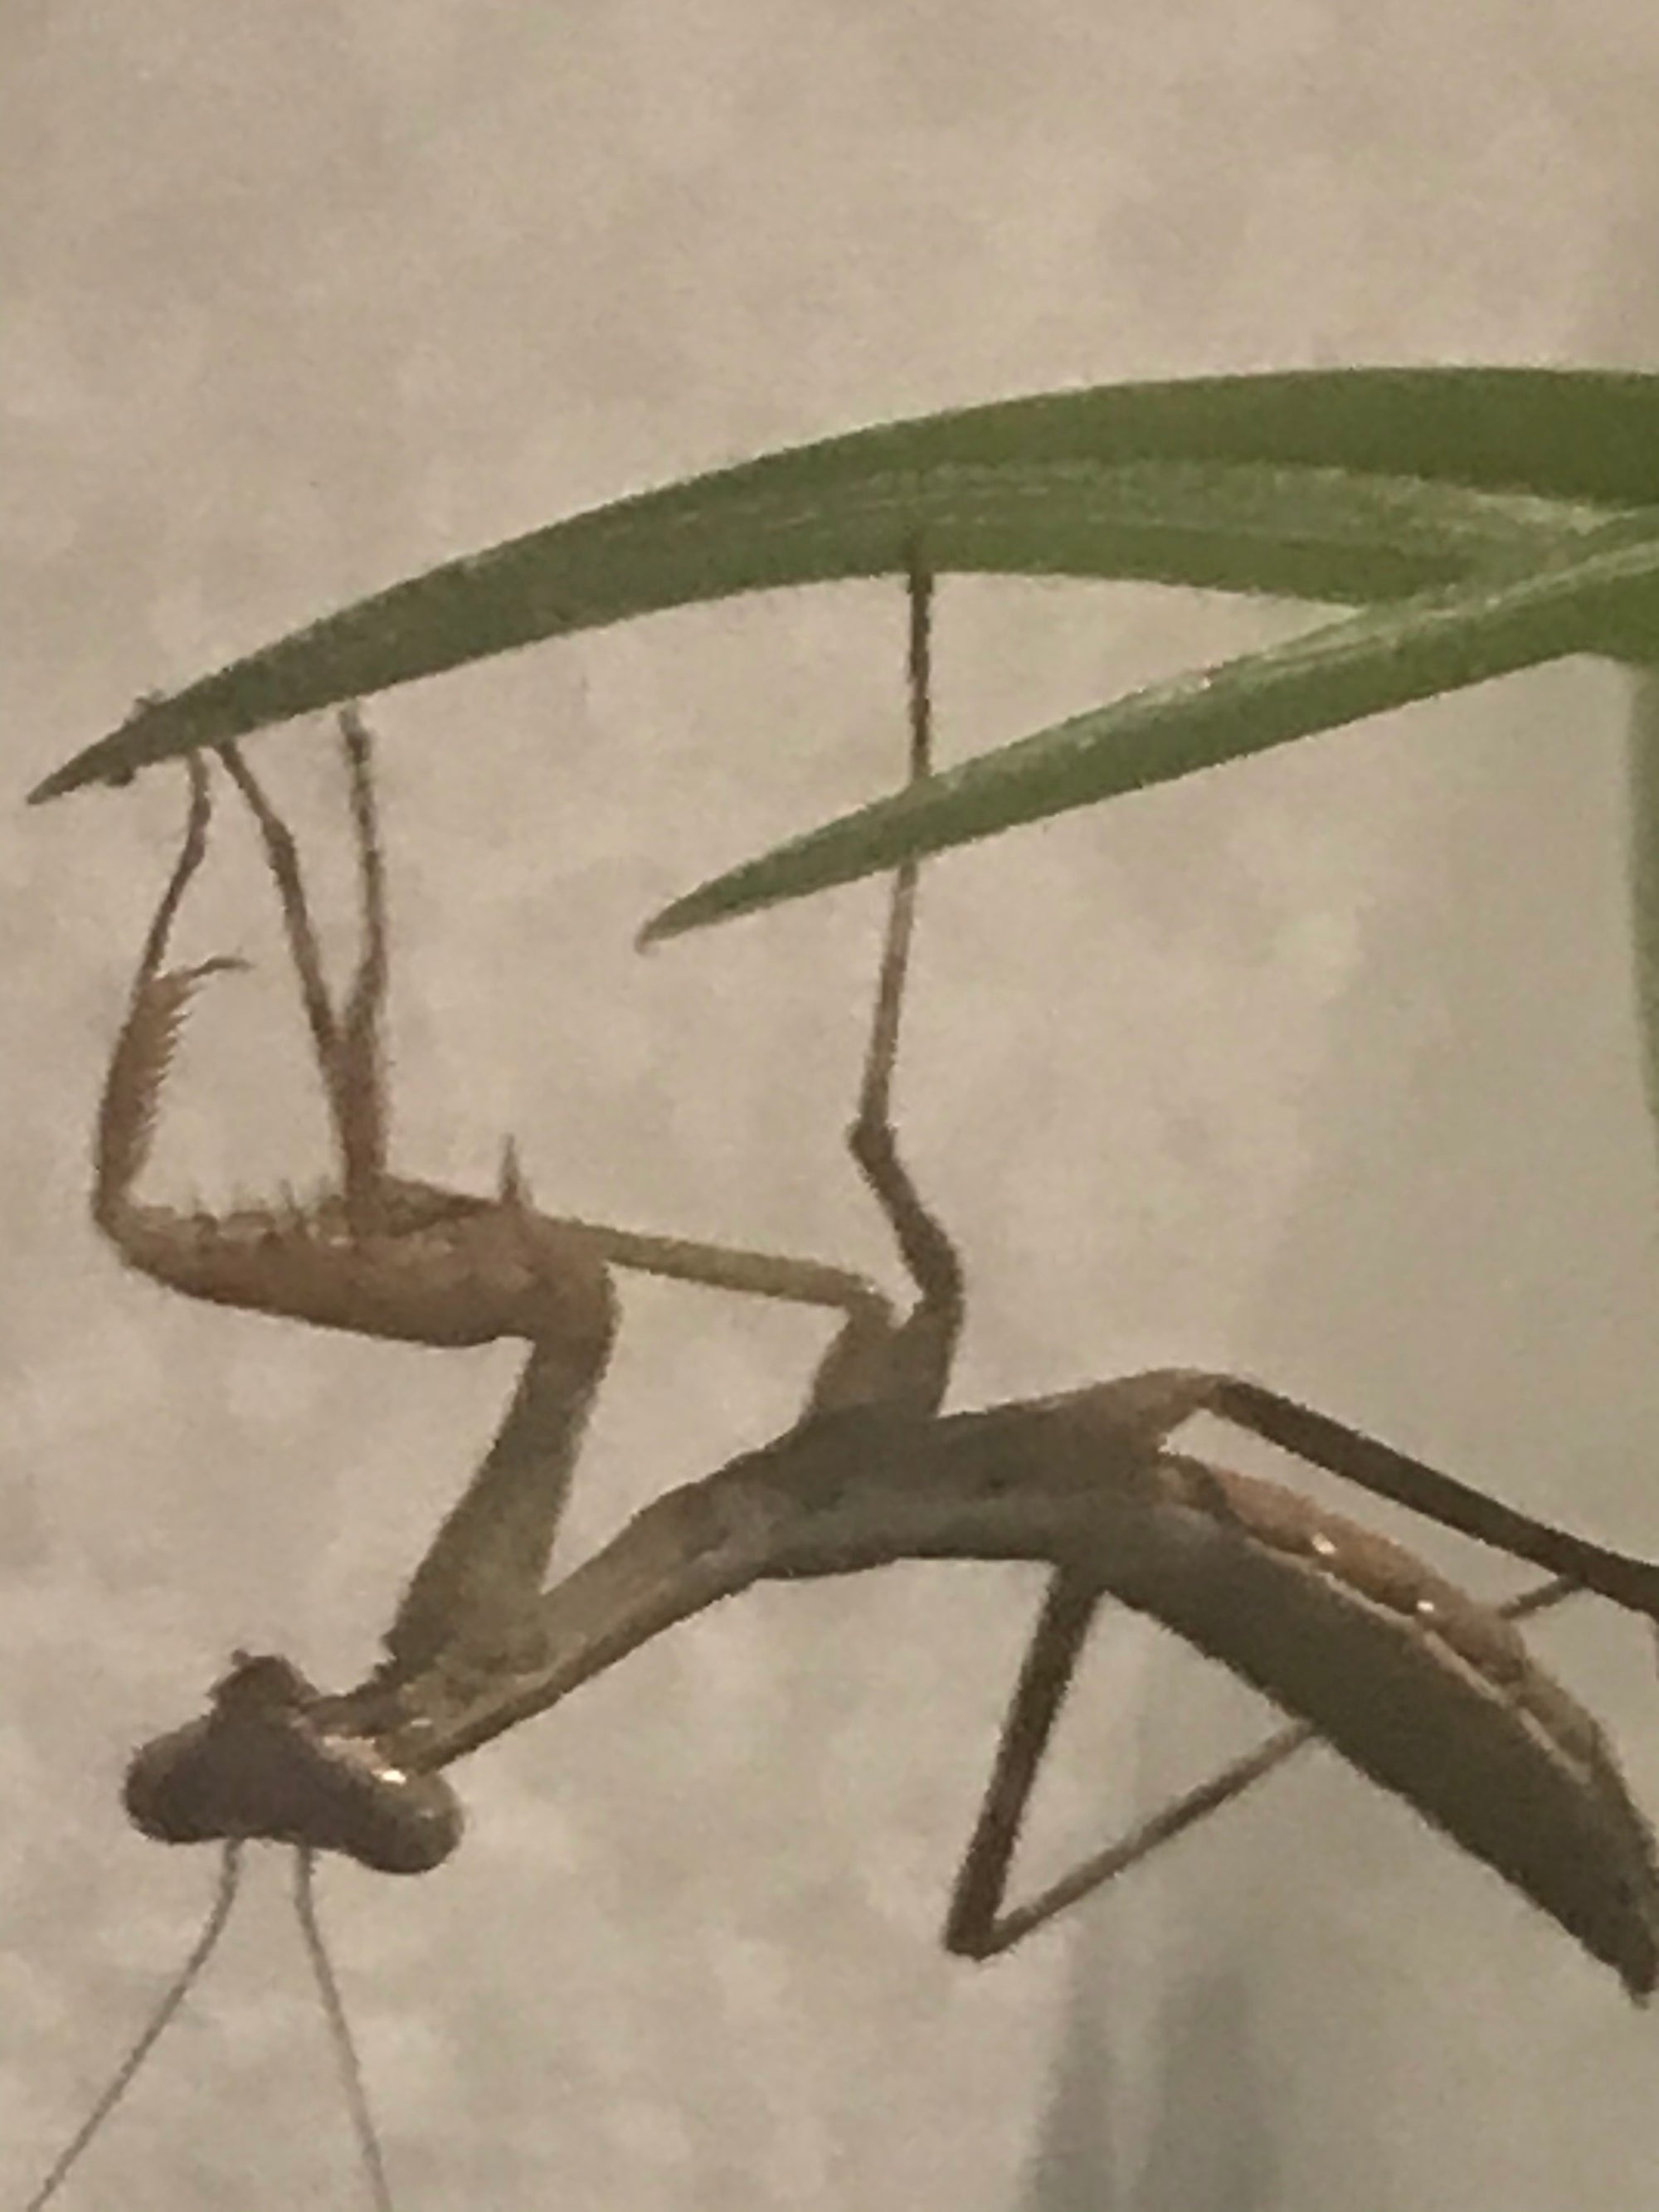 Plistospilota guineensis "Mega Mantis" 